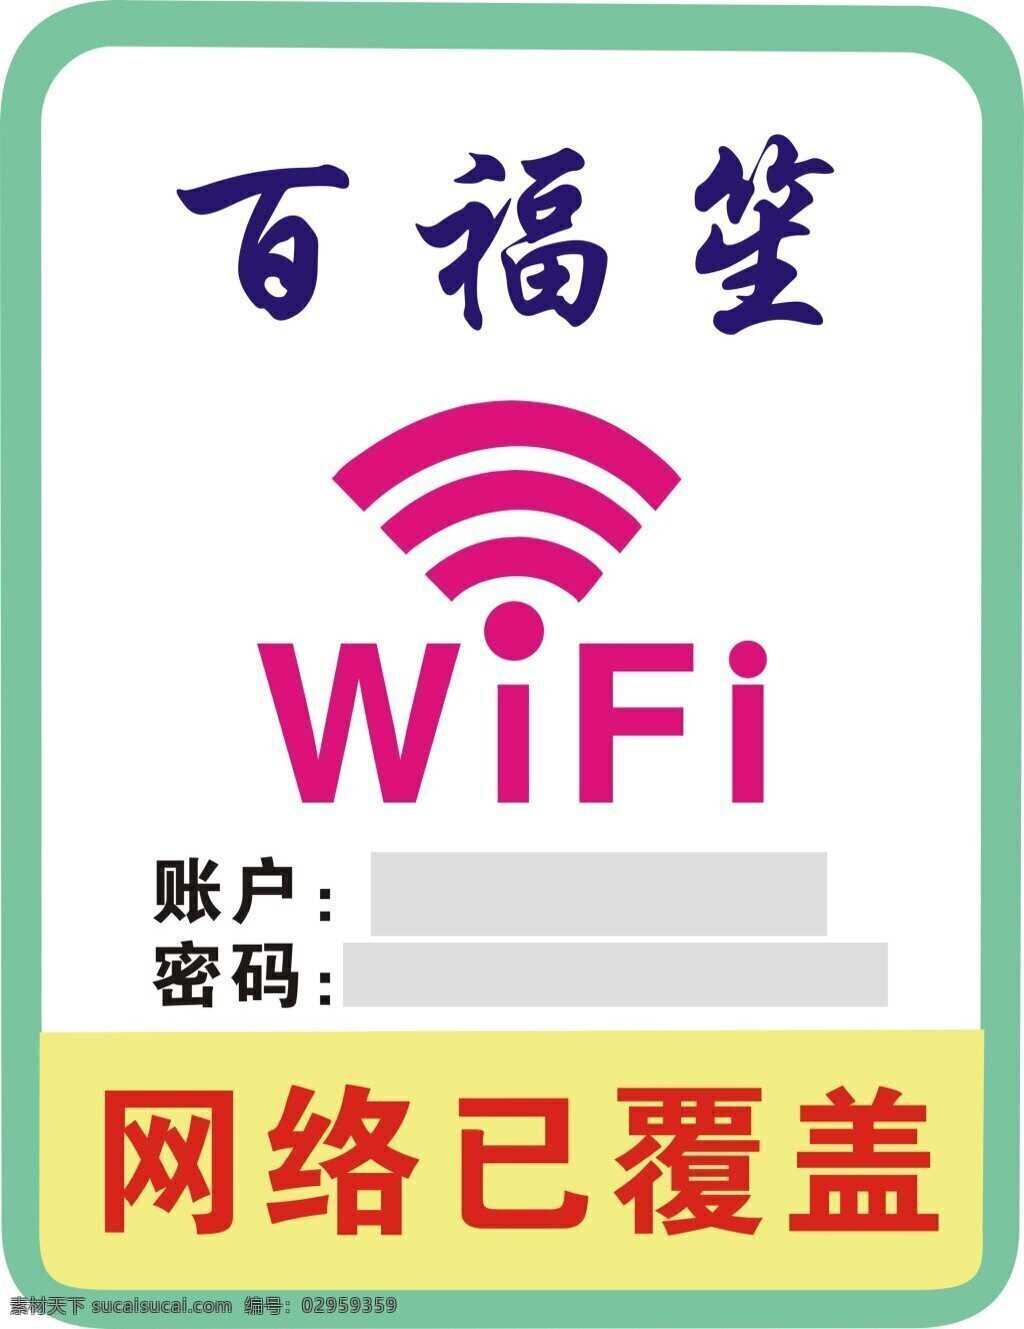 wifi 标识 公共wifi 网络已覆盖 wifi帐号 密码